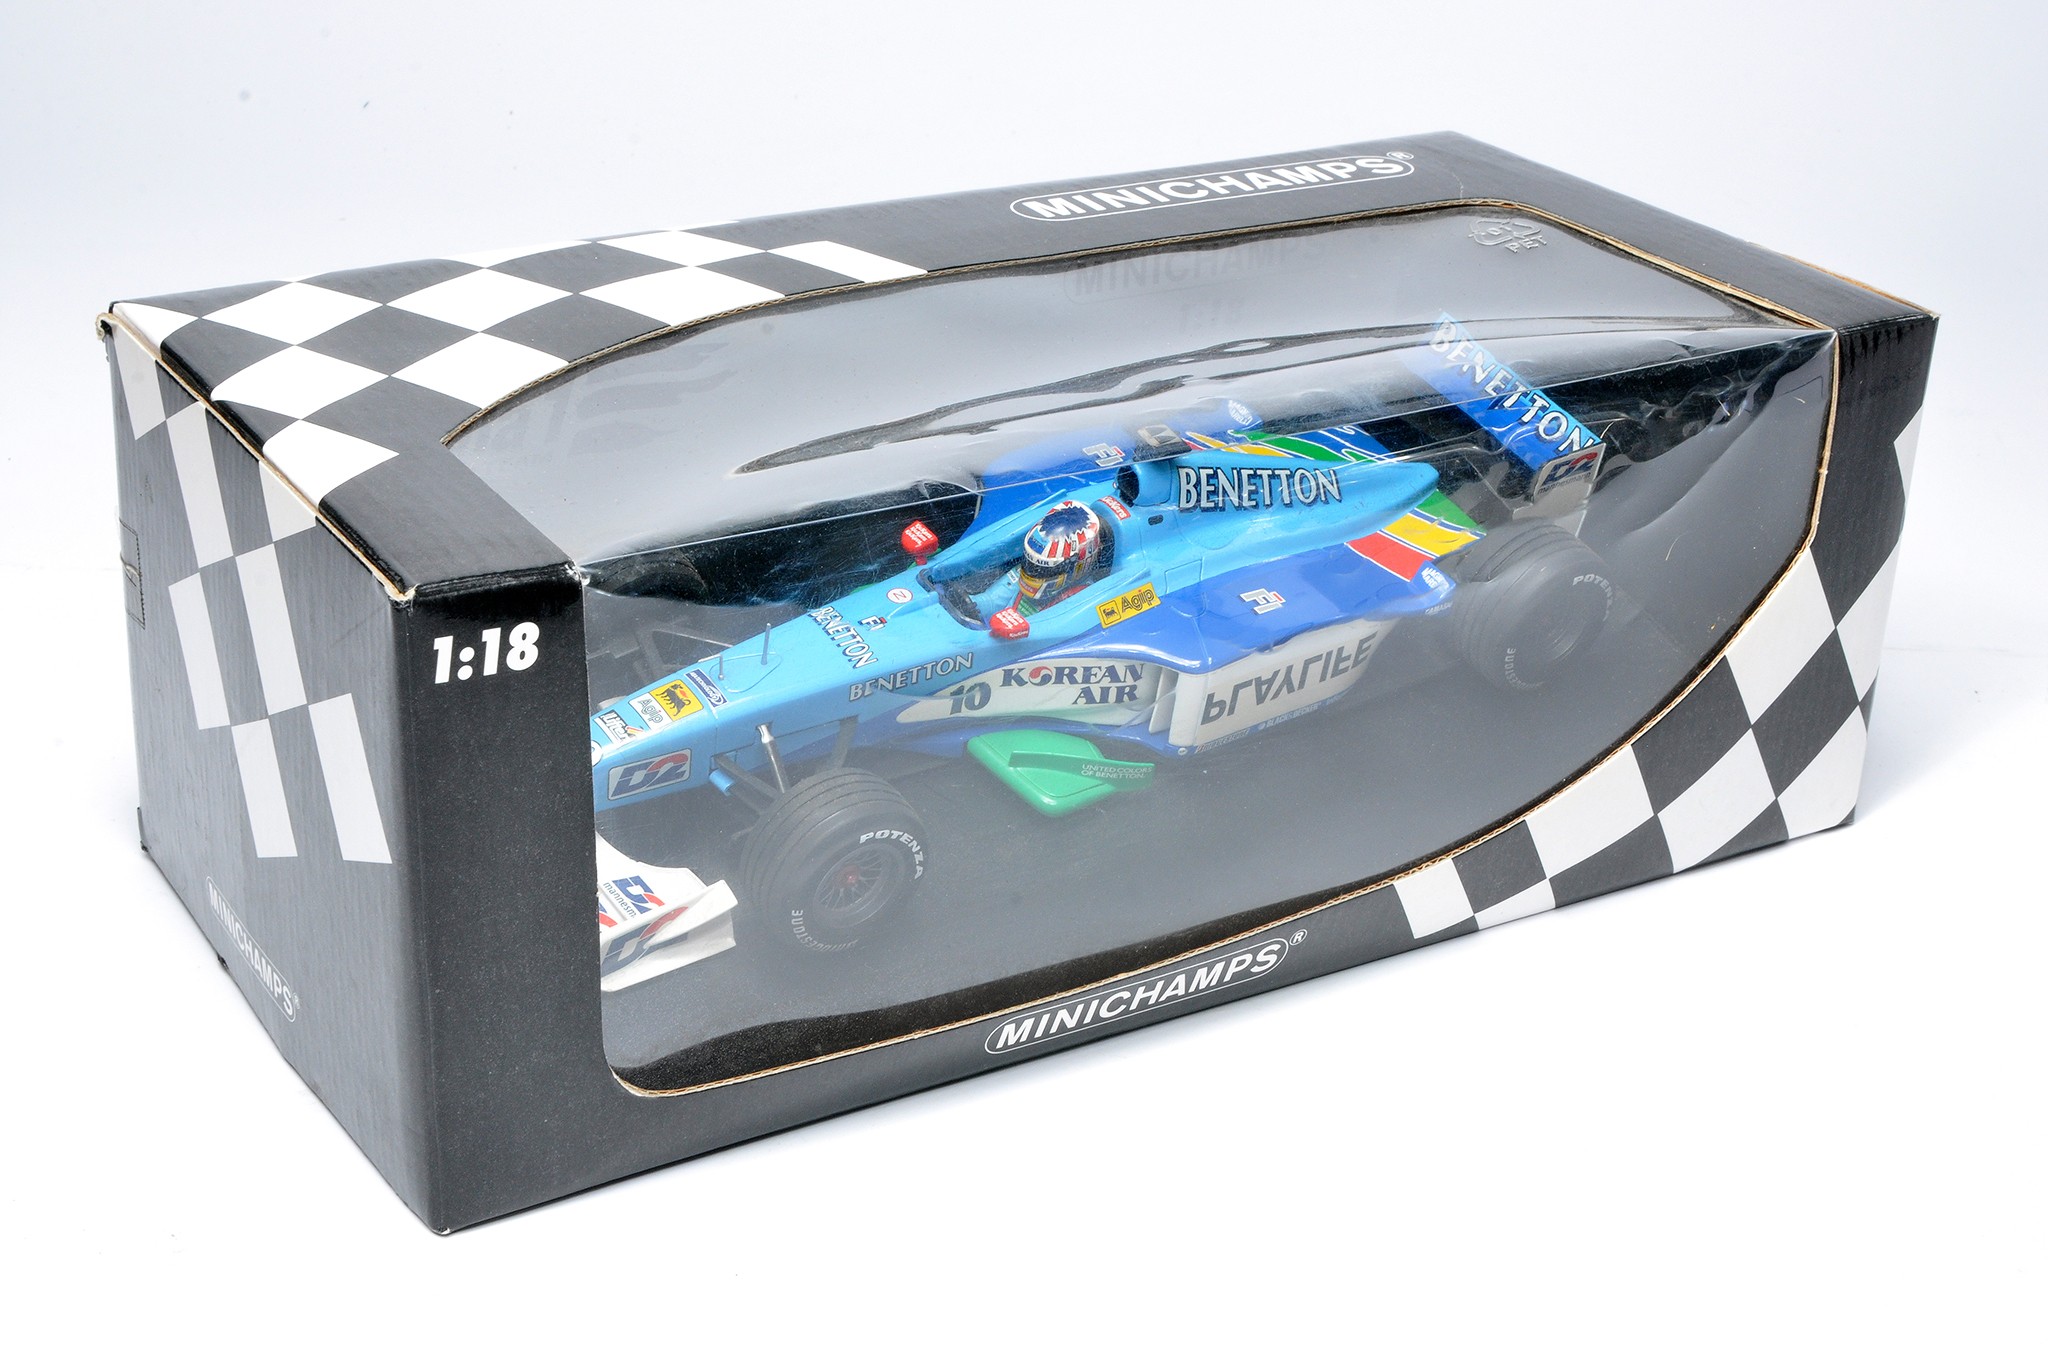 Minichamps 1/18 diecast model racing car issue comprising Benetton B199 Formula One, A Wurz. Looks